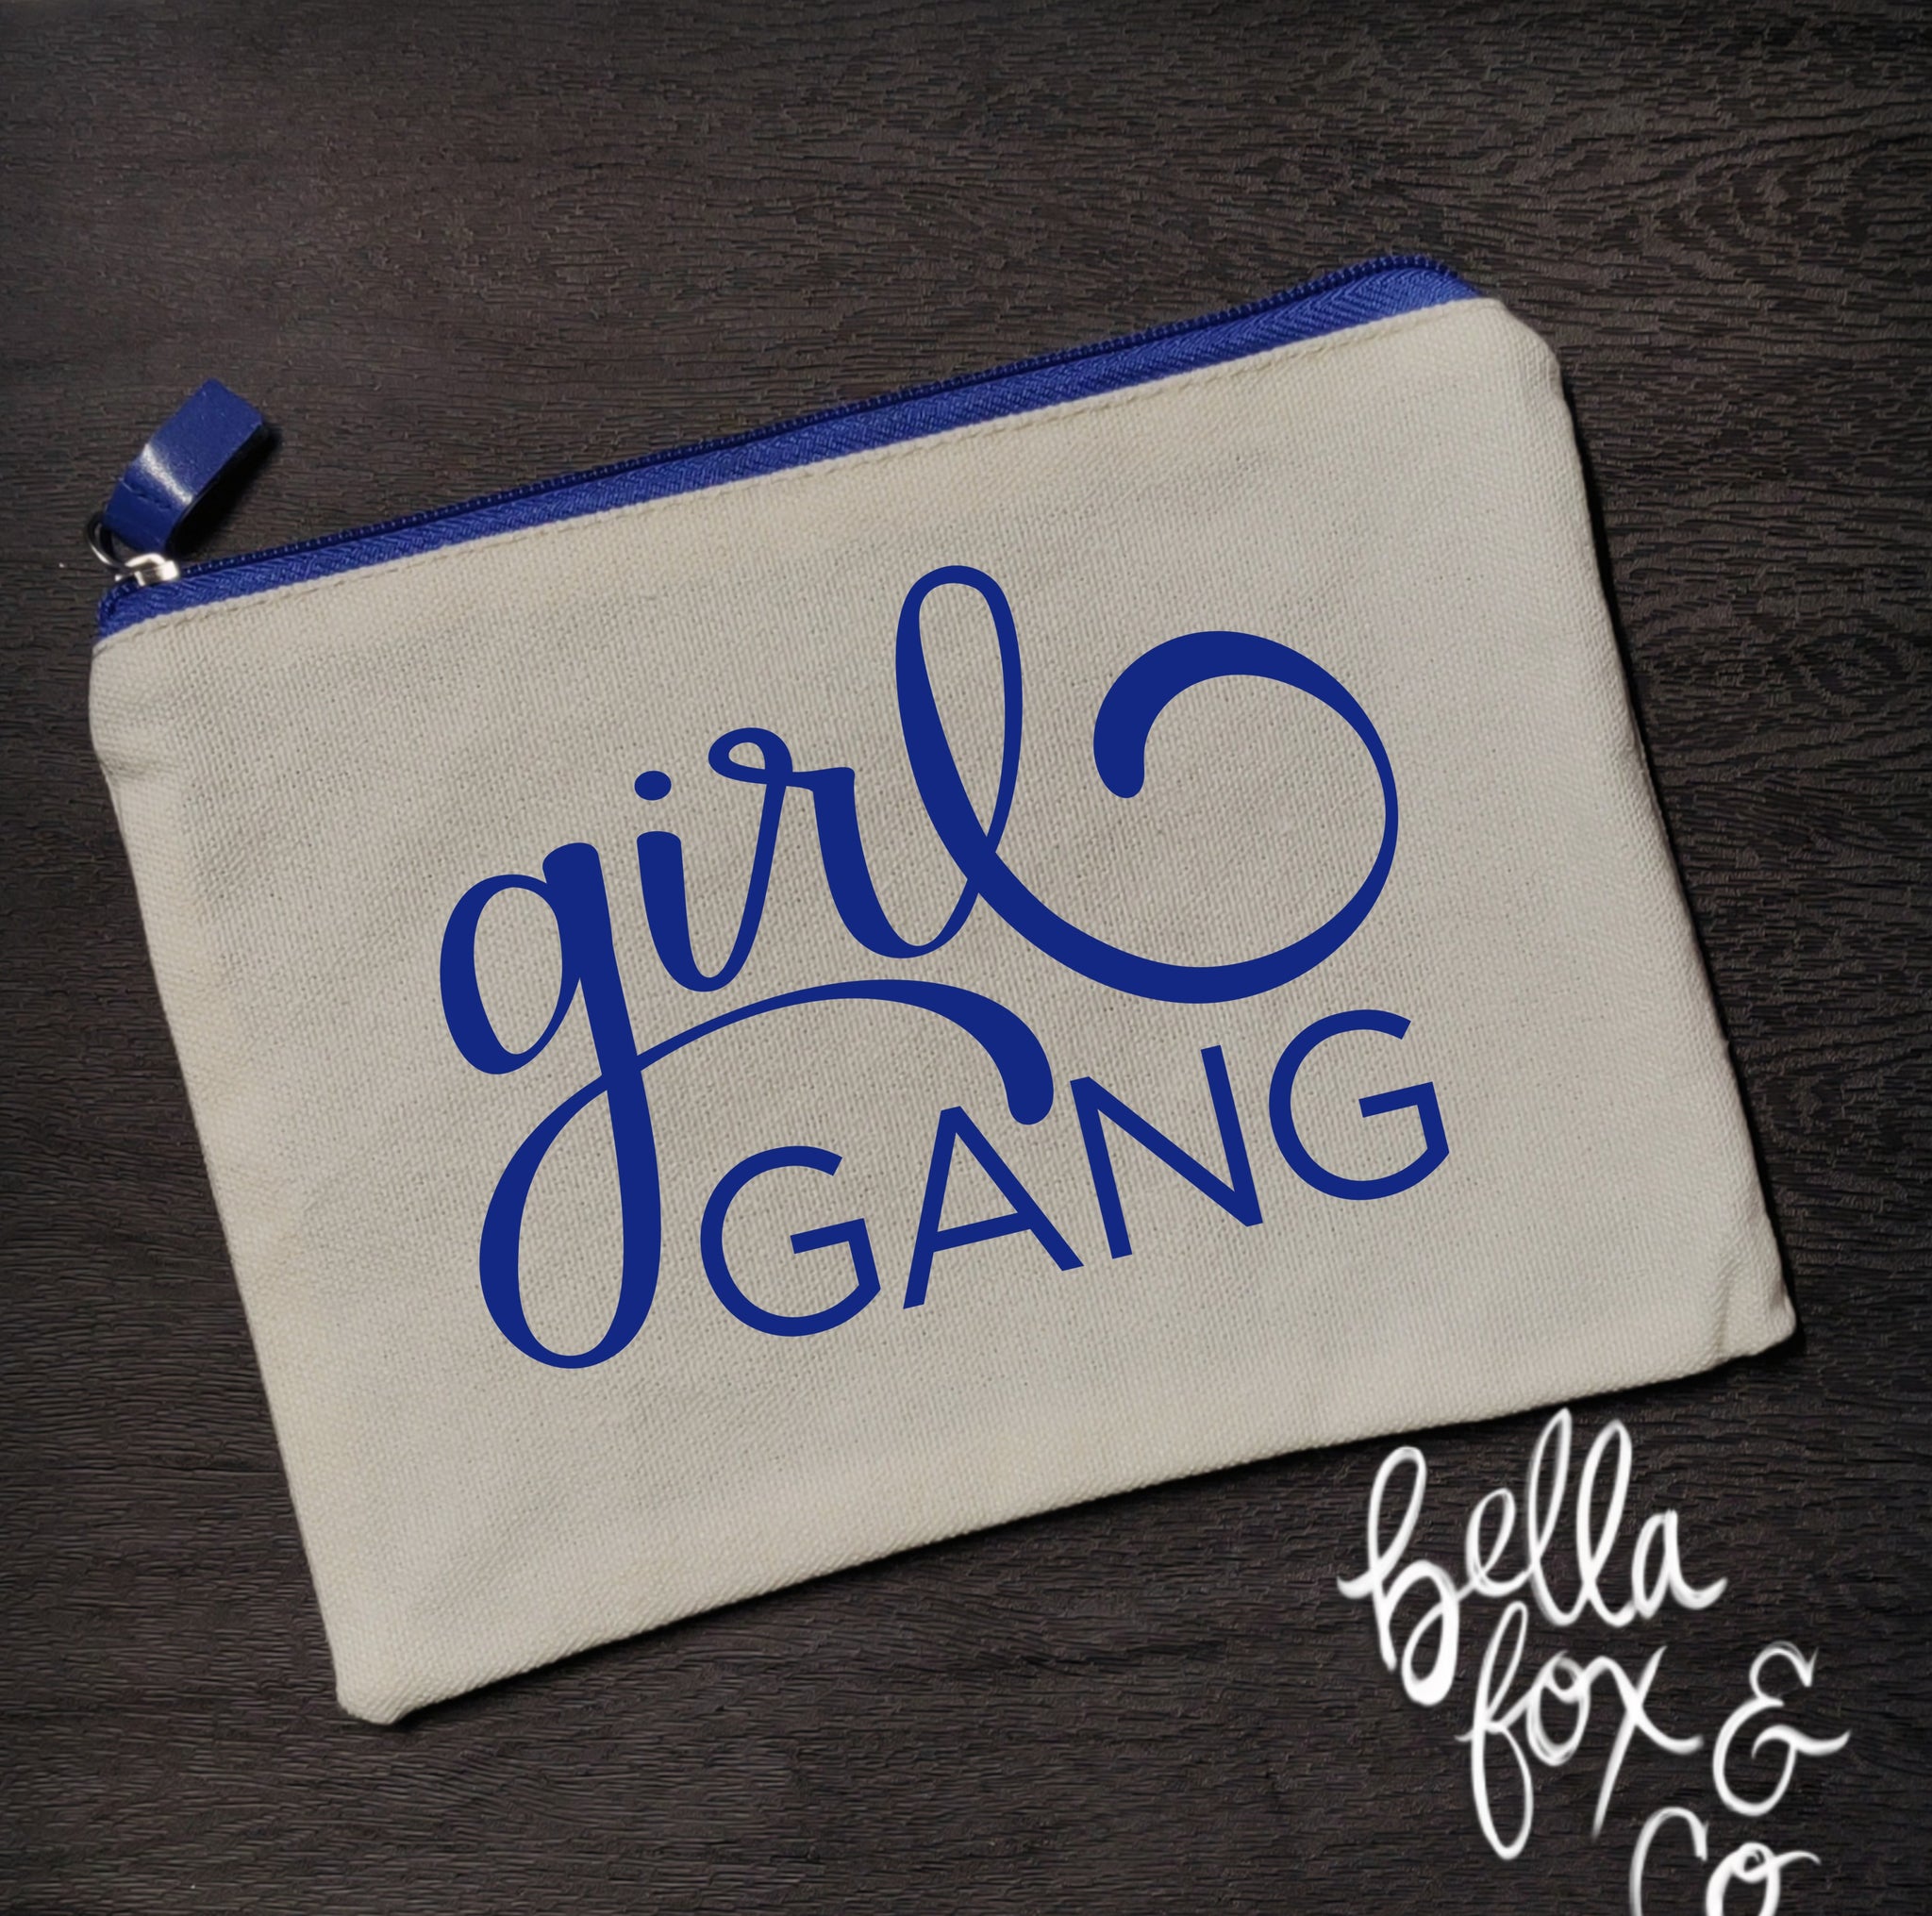 Girl Gang Makeup Bag **FREE SHIPPING